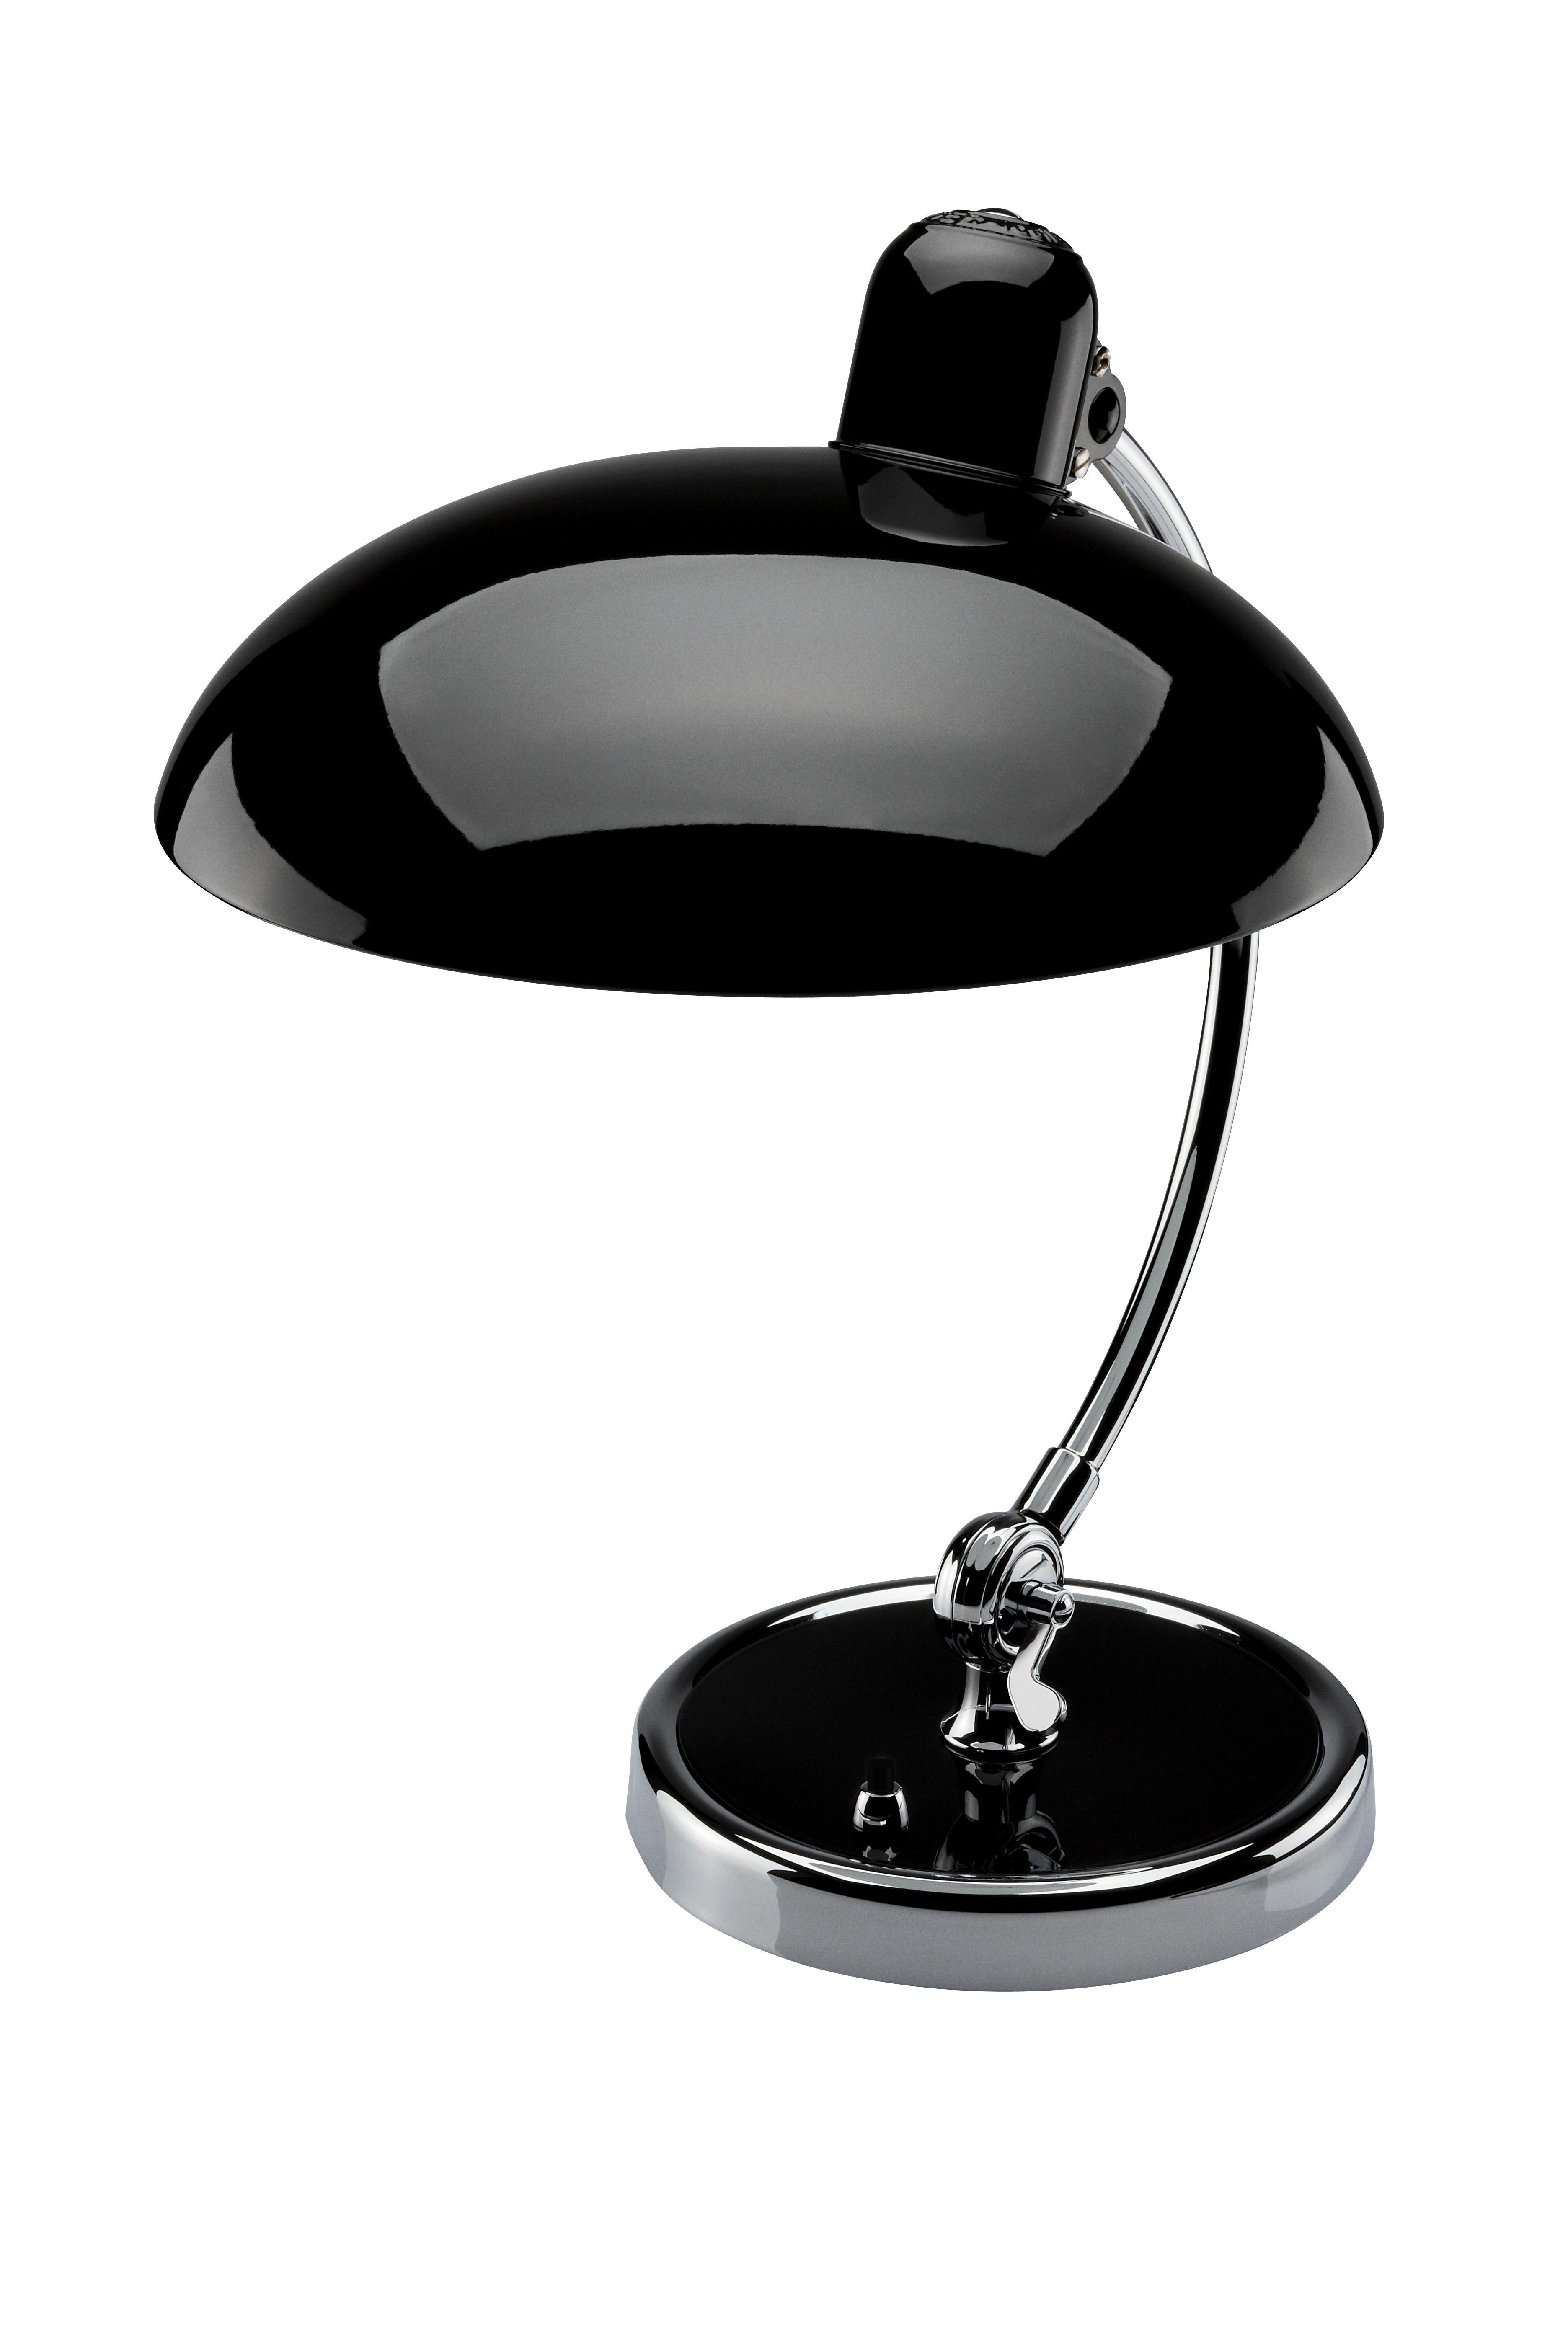 Christian Dell 'Kaiser Idell 6631-T' Table Lamp for Fritz Hansen in Gloss Black In New Condition For Sale In Glendale, CA